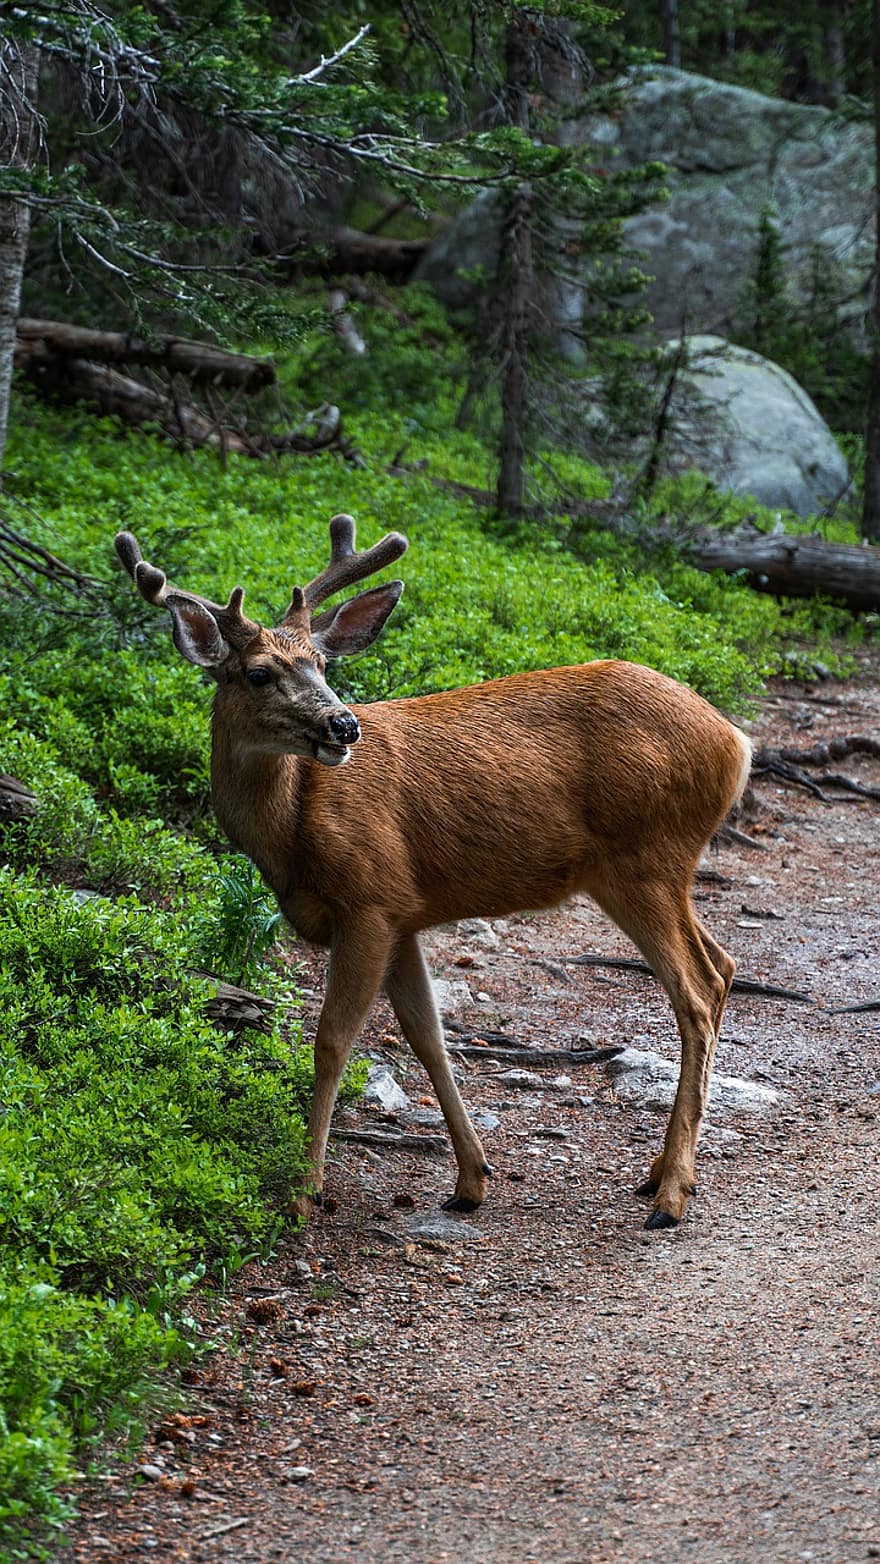 Deer, Wildlife, Animal, Mammal, Nature, Wild, Antler, Forest, Outdoors, Hunting, Grass